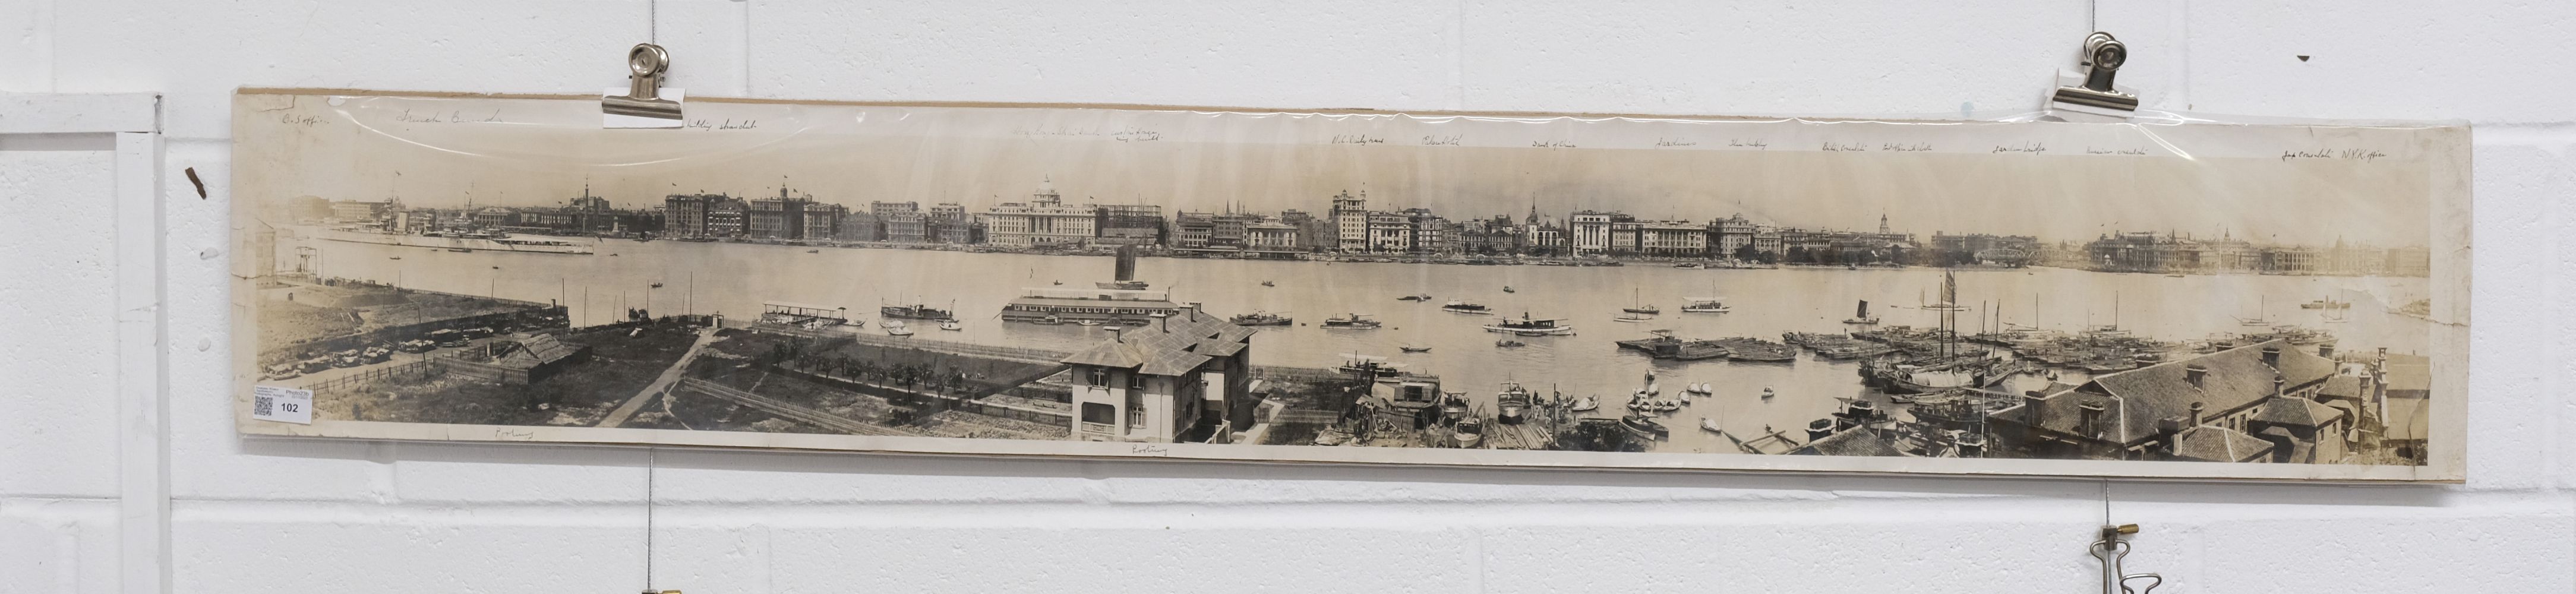 China. Panorama of Shanghai, [Afong Studio], 1926/7, gelatin silver print panorama - Image 2 of 6